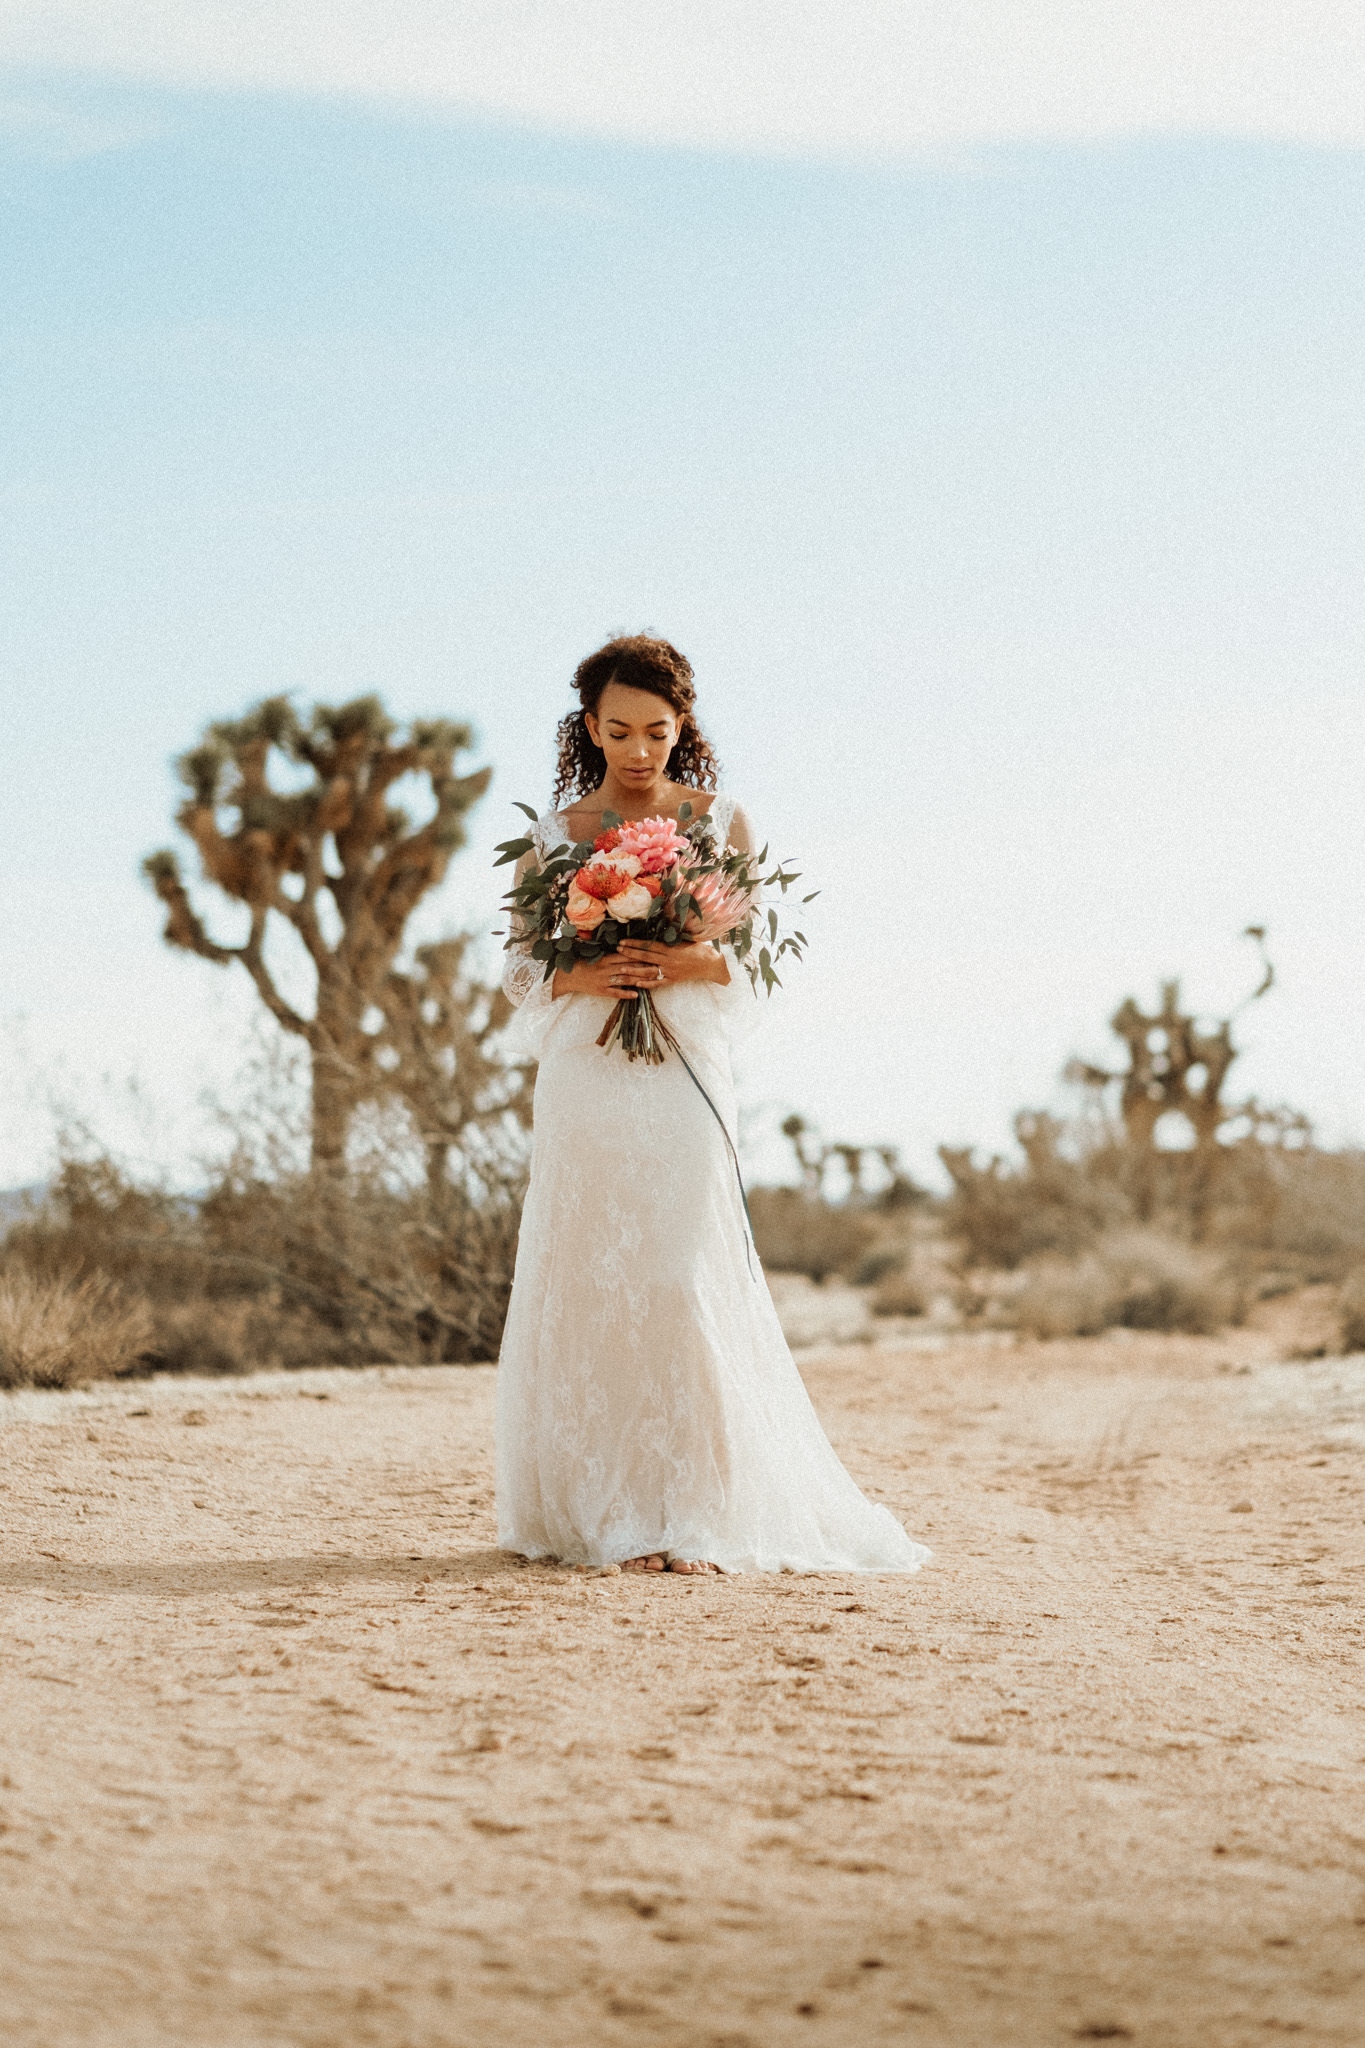 Wedding dress in Joshua Tree - How to Choose Your Wedding Dress